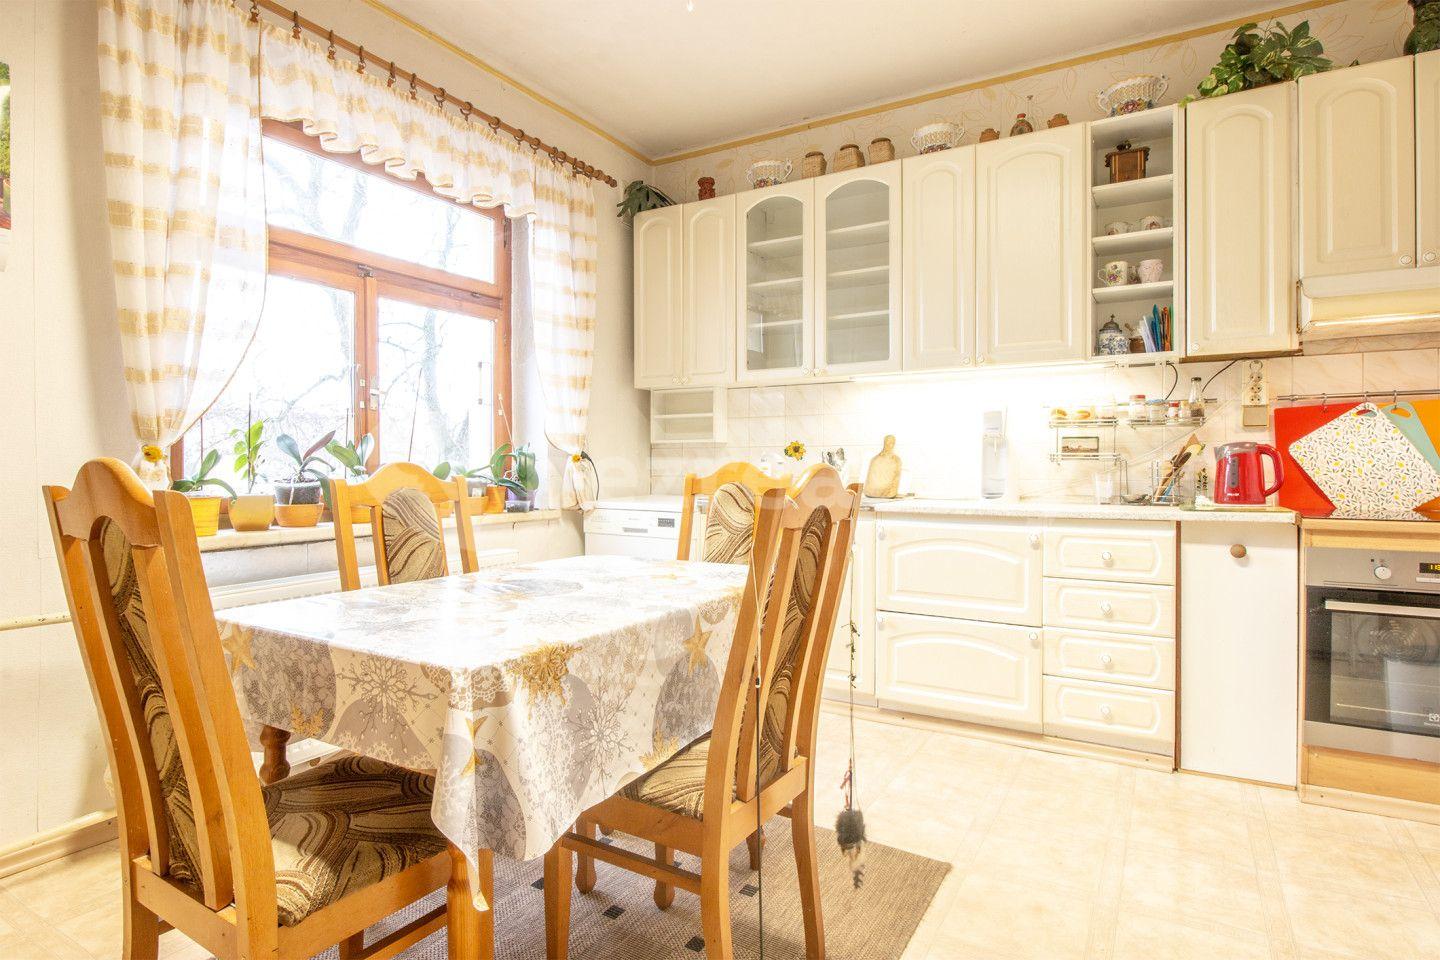 house for sale, 220 m², Komenského, Mimoň, Liberecký Region